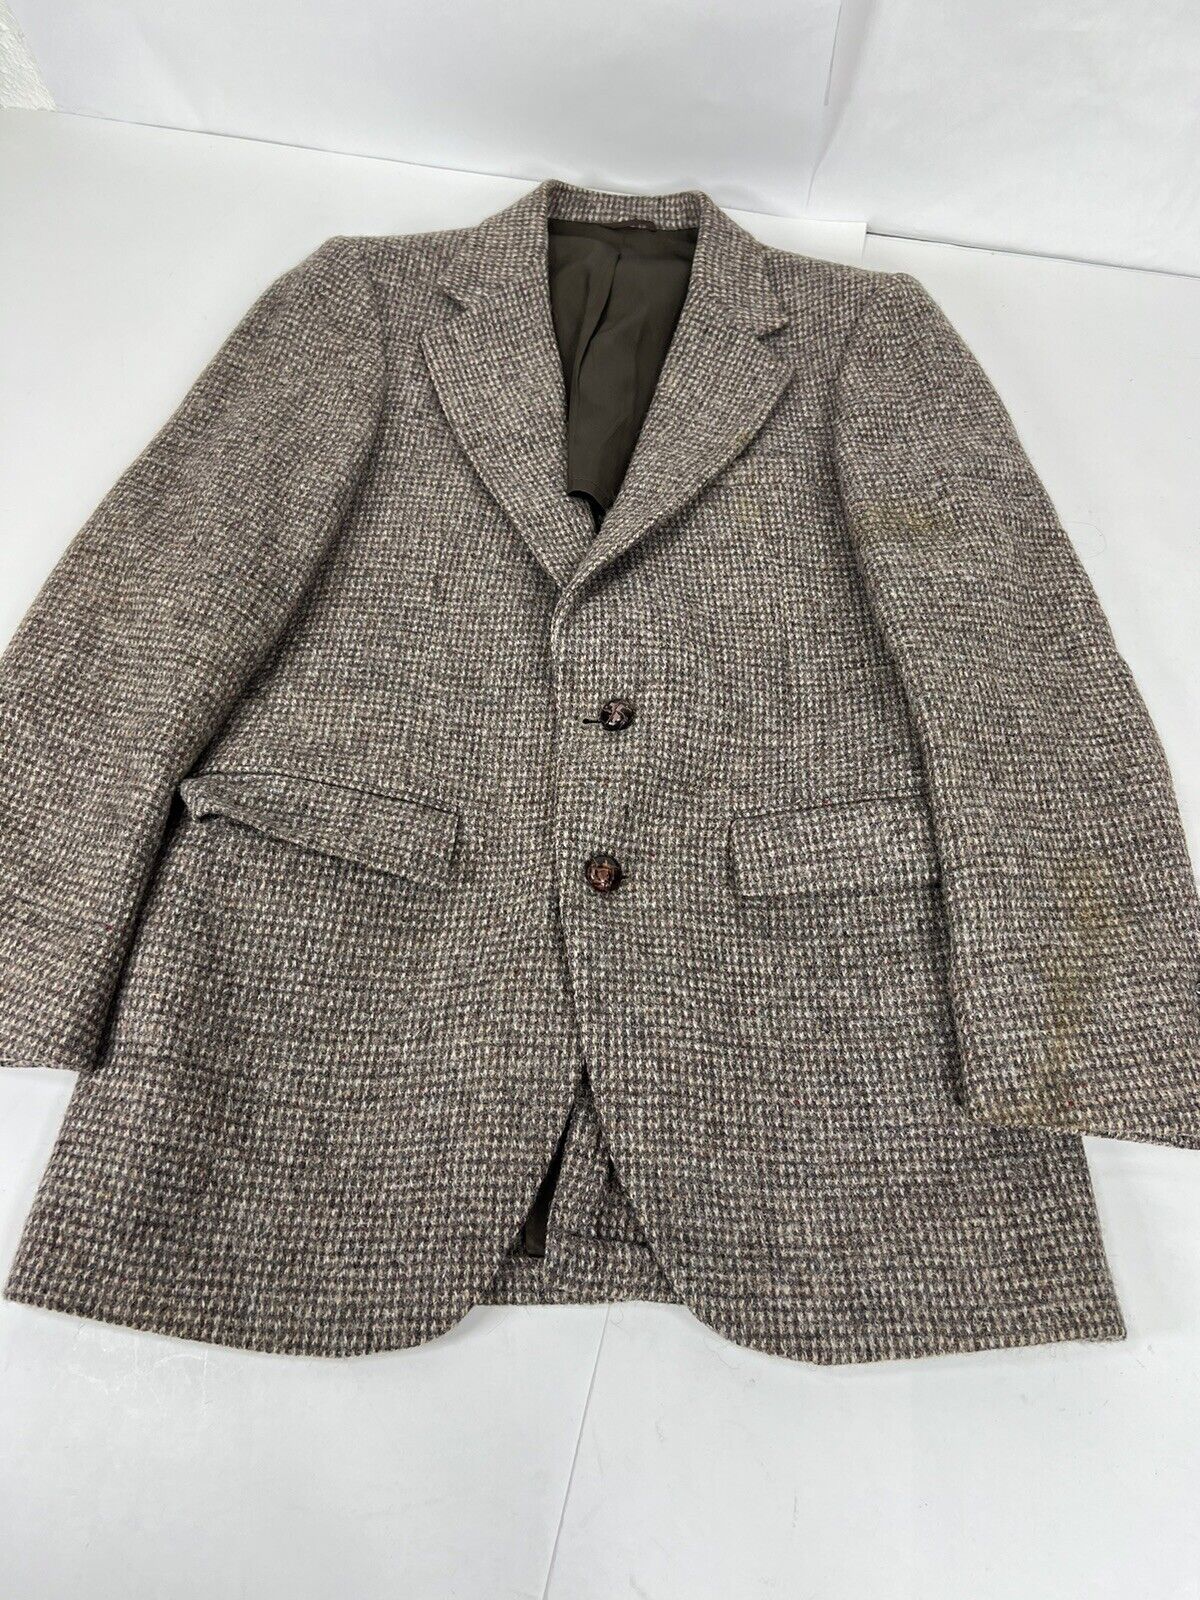 VTG Stafford Harris Tweed Blazer Sport Coat Sport Jacket Wool Two Button READ